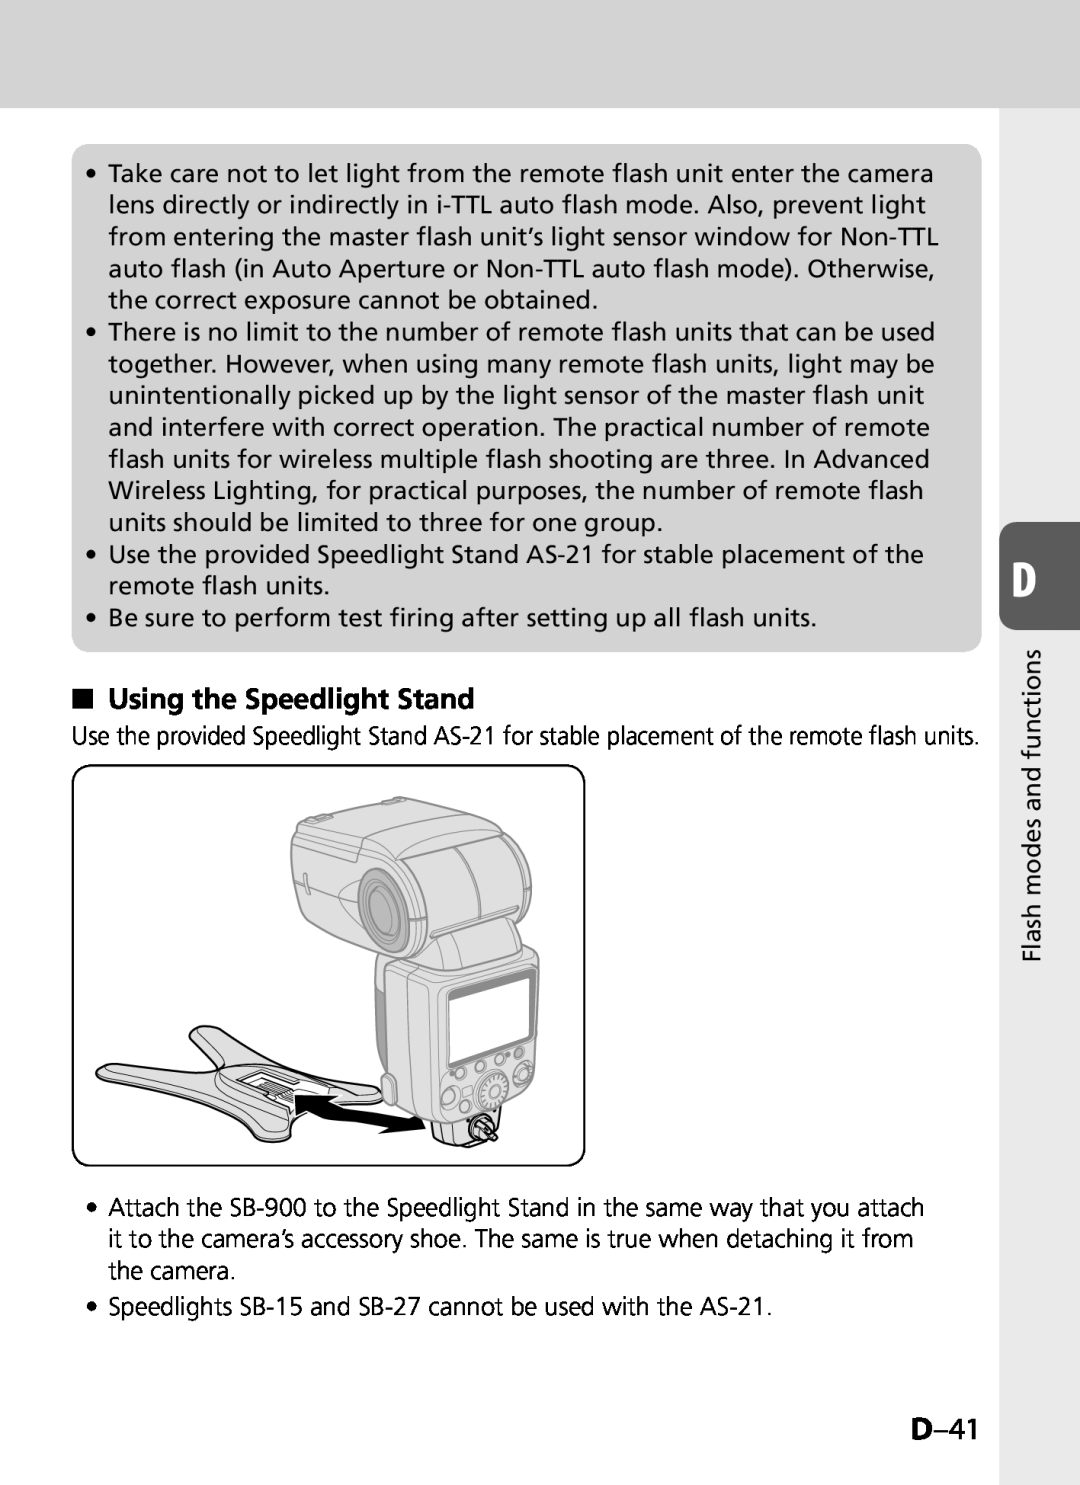 Univex SB-900 user manual D-41, Using the Speedlight Stand 